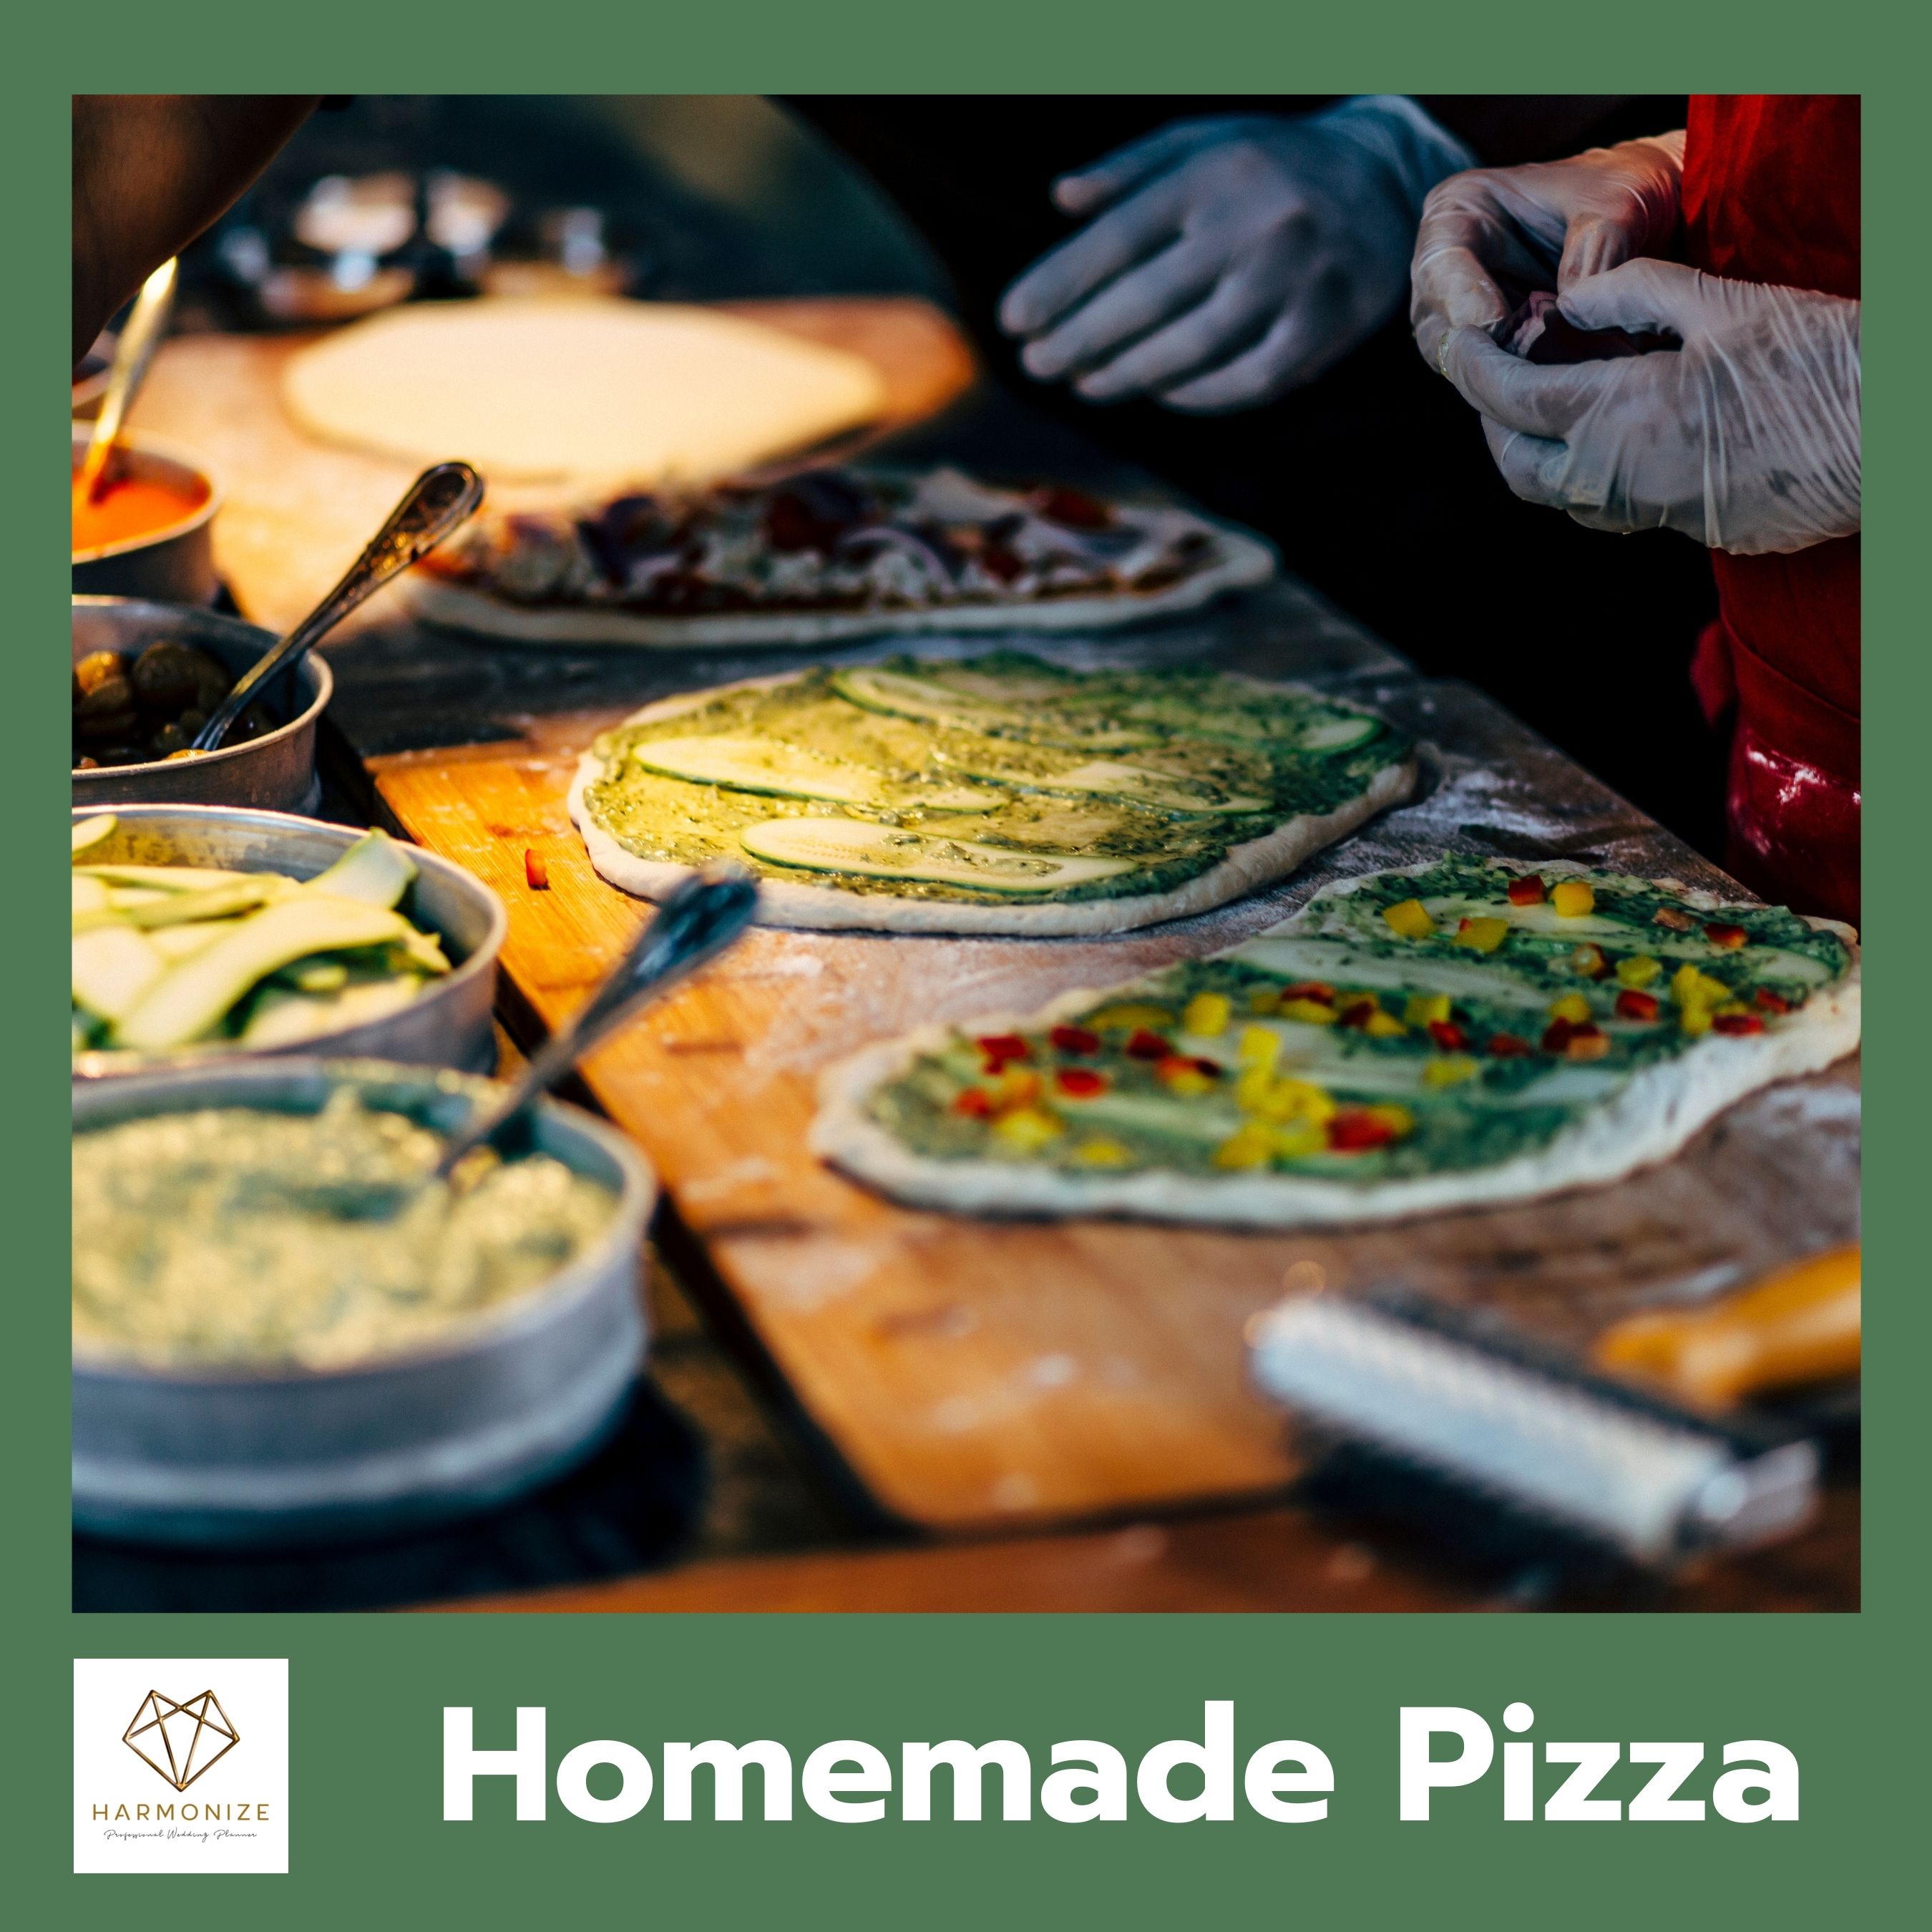 Homemade Pizza - ไอเดียสุดเก๋ สำหรับ "อาหาร" Wedding & Party